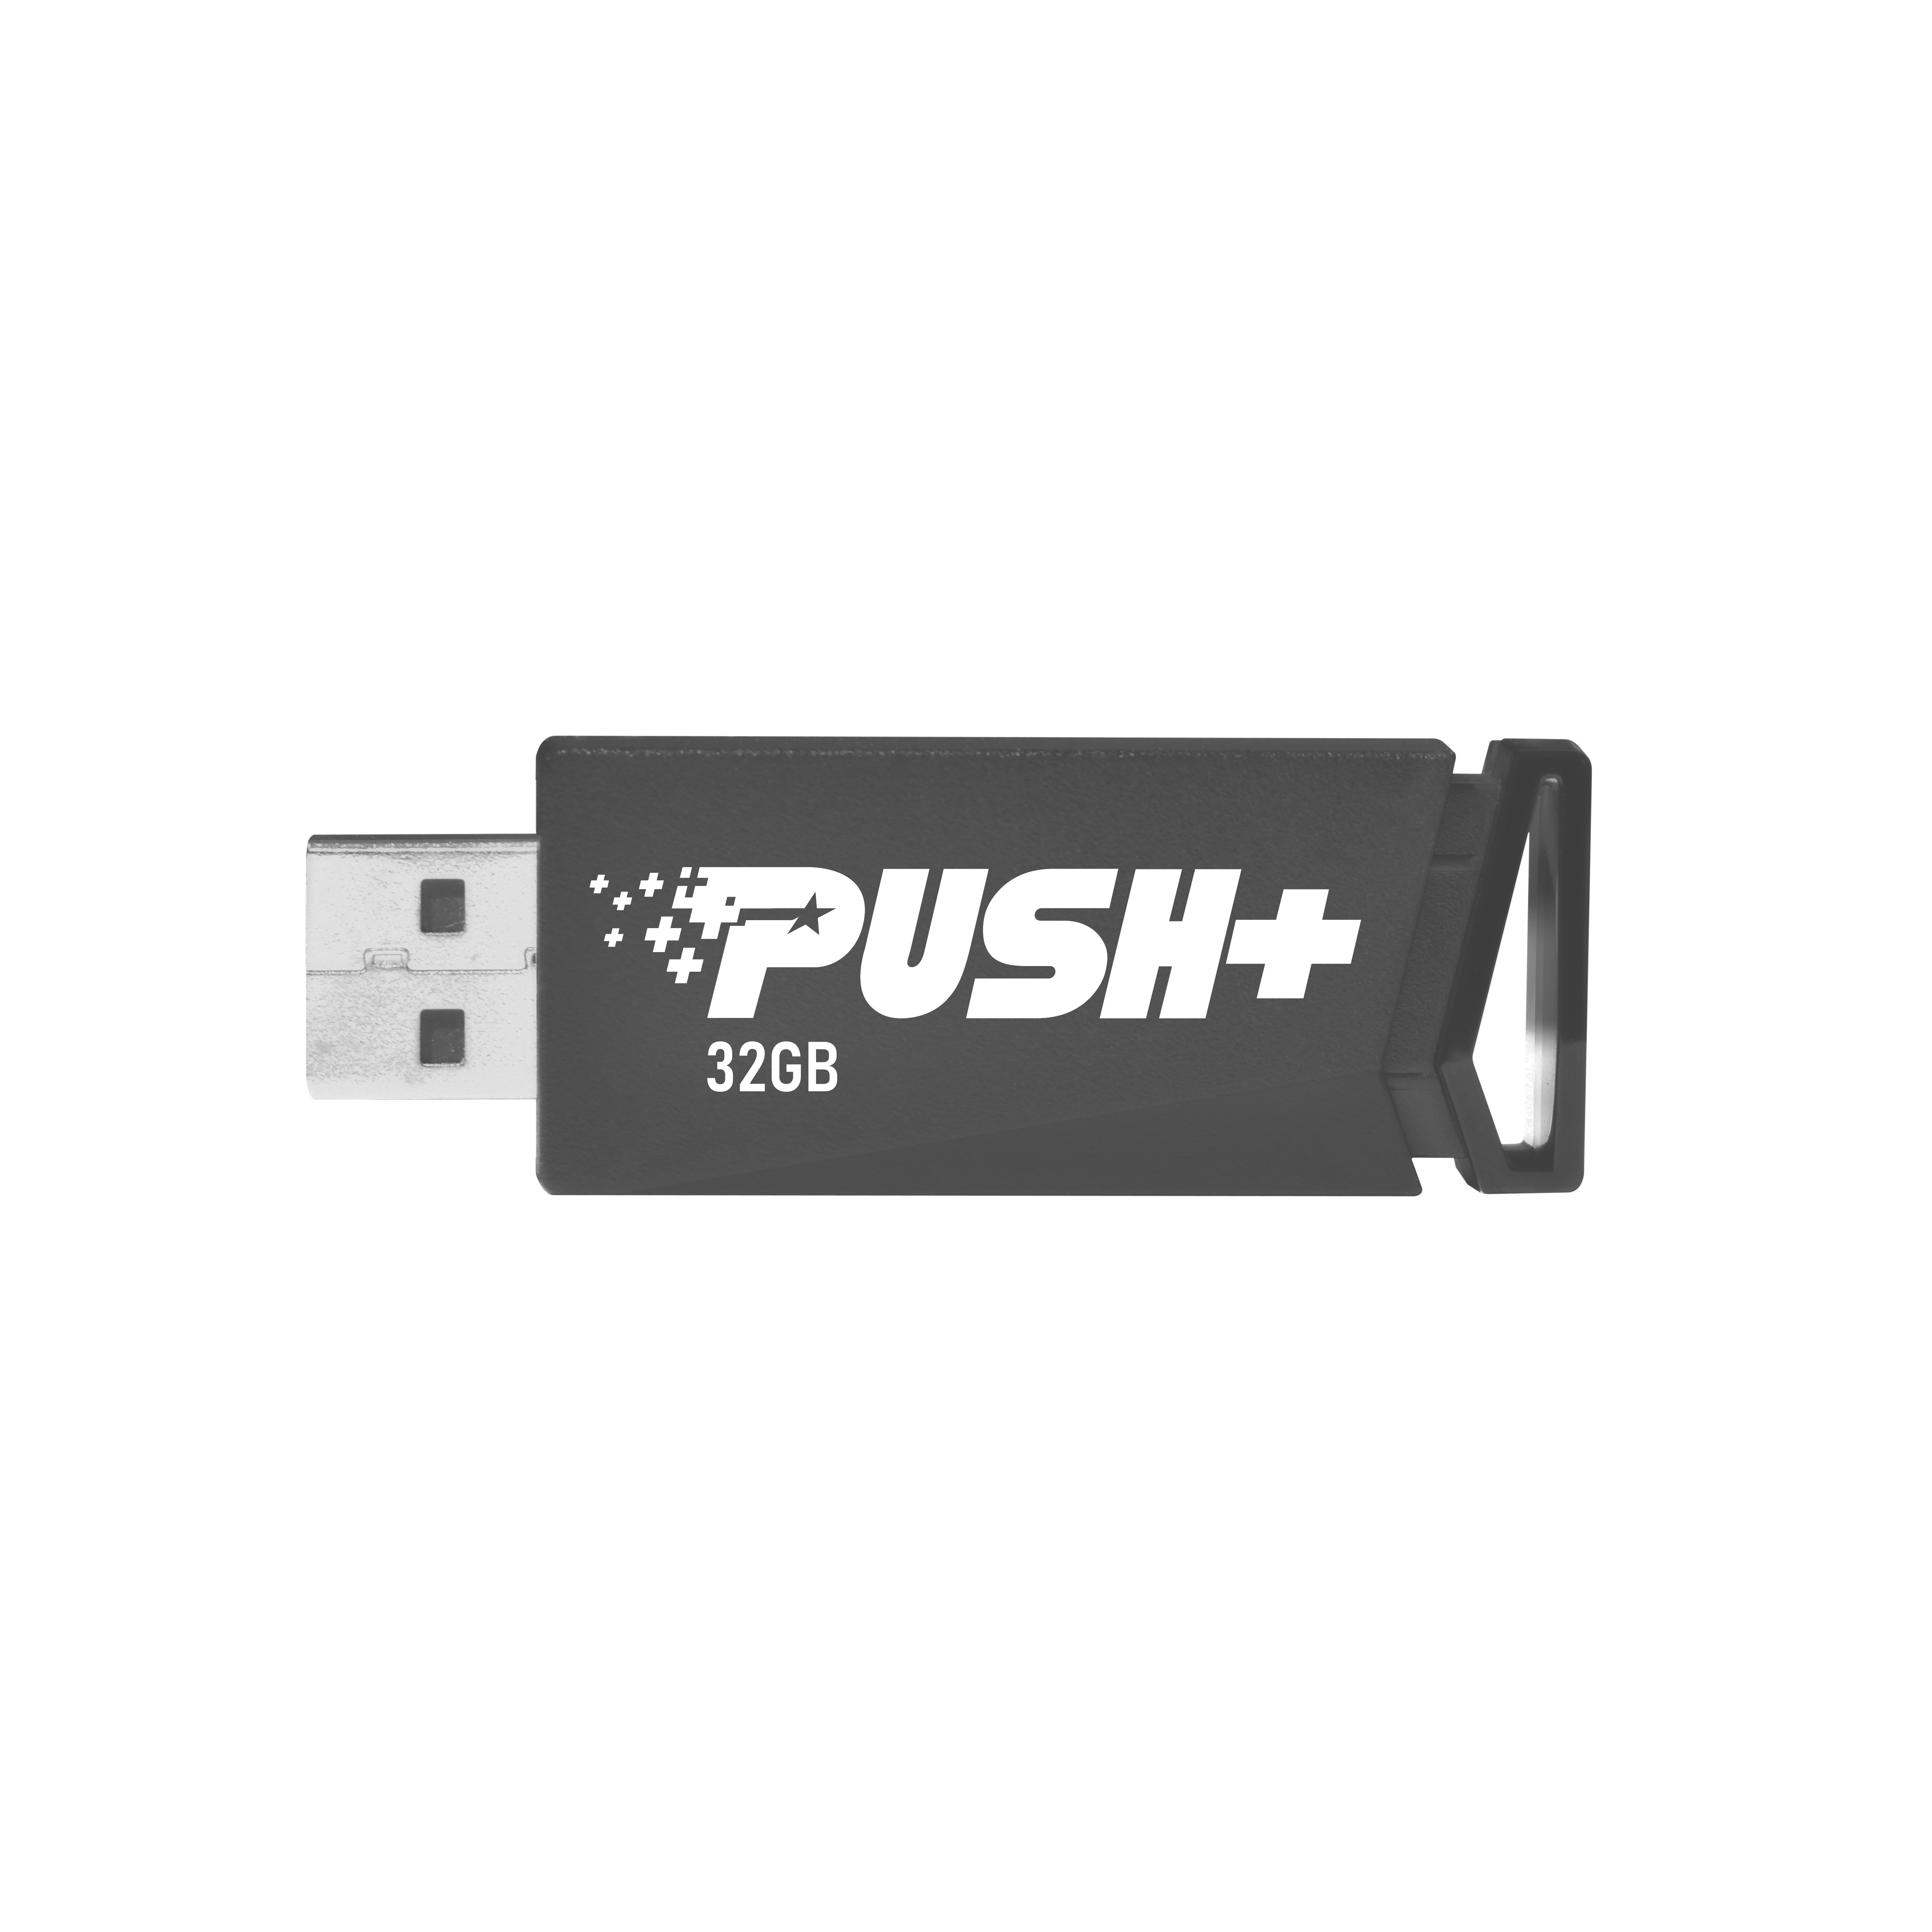 Patriot Push+ 32GB USB 3.2 Gen 1 Type-A Flash Drive - Thumb Drive - Pen Drive - PSF32GPSHB32U - image 1 of 3